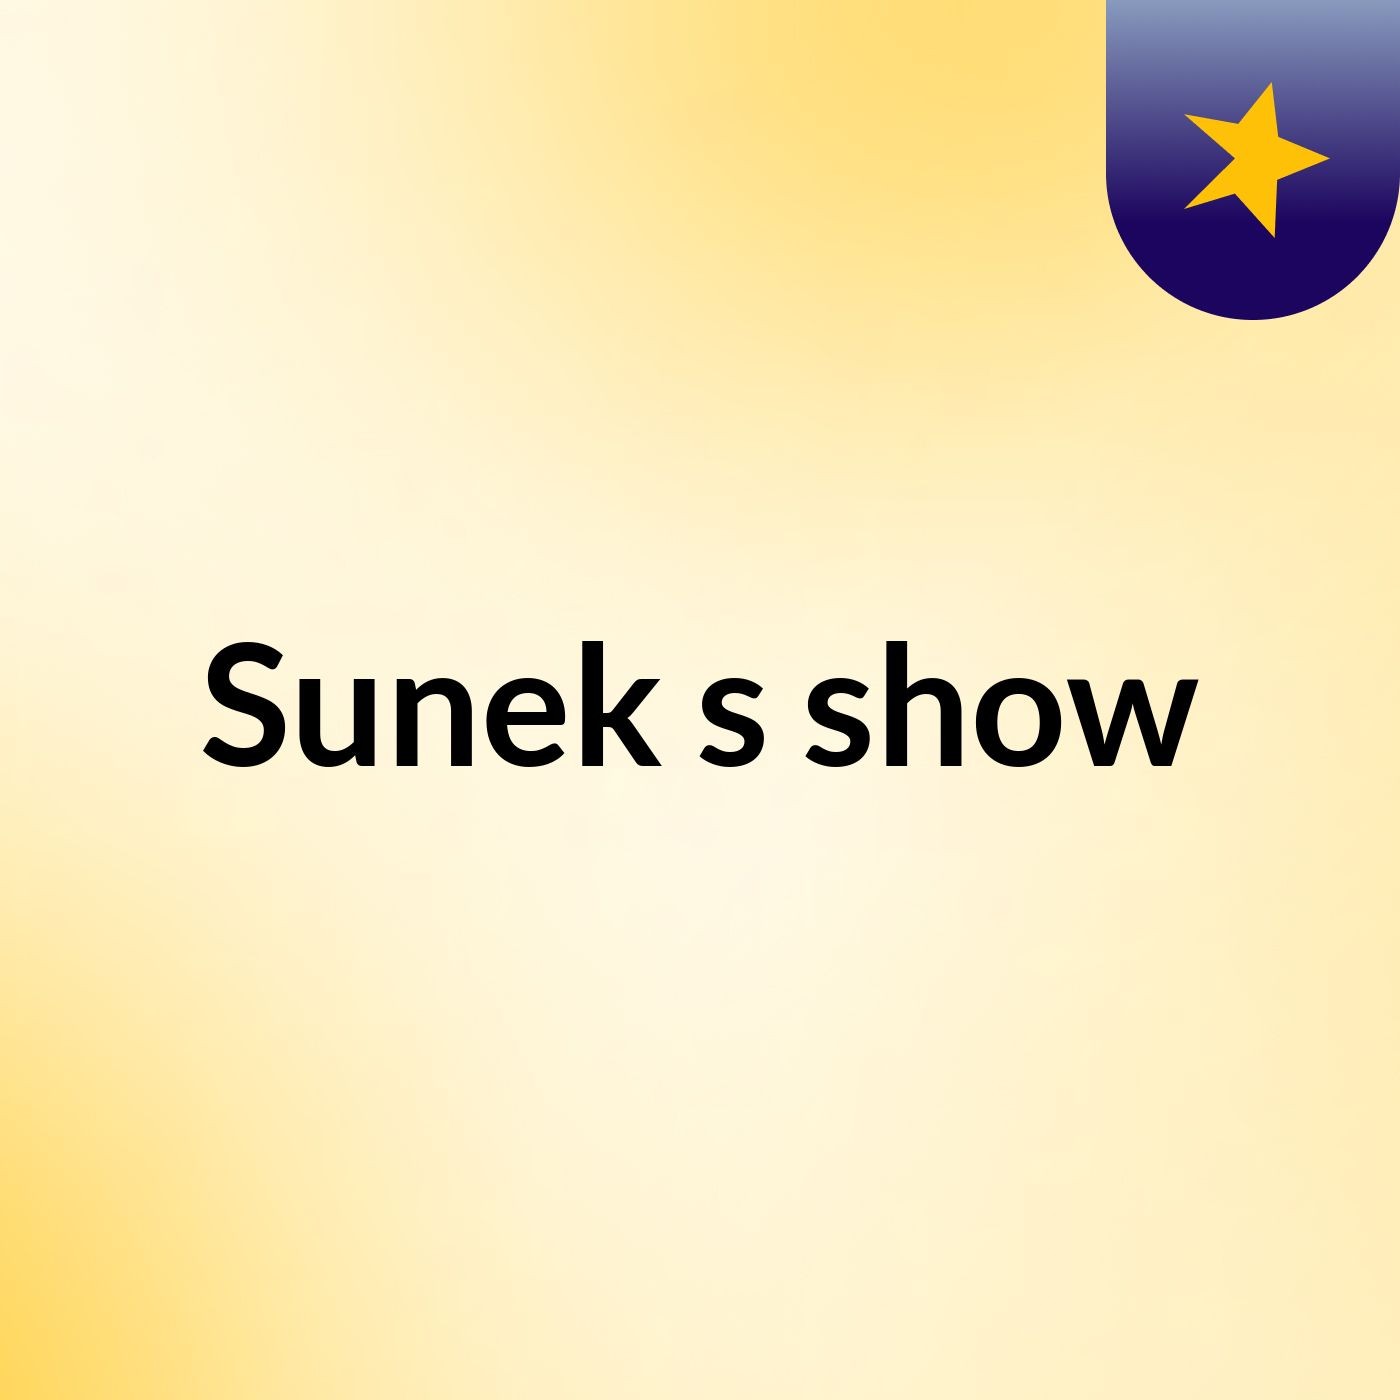 Sunek's show